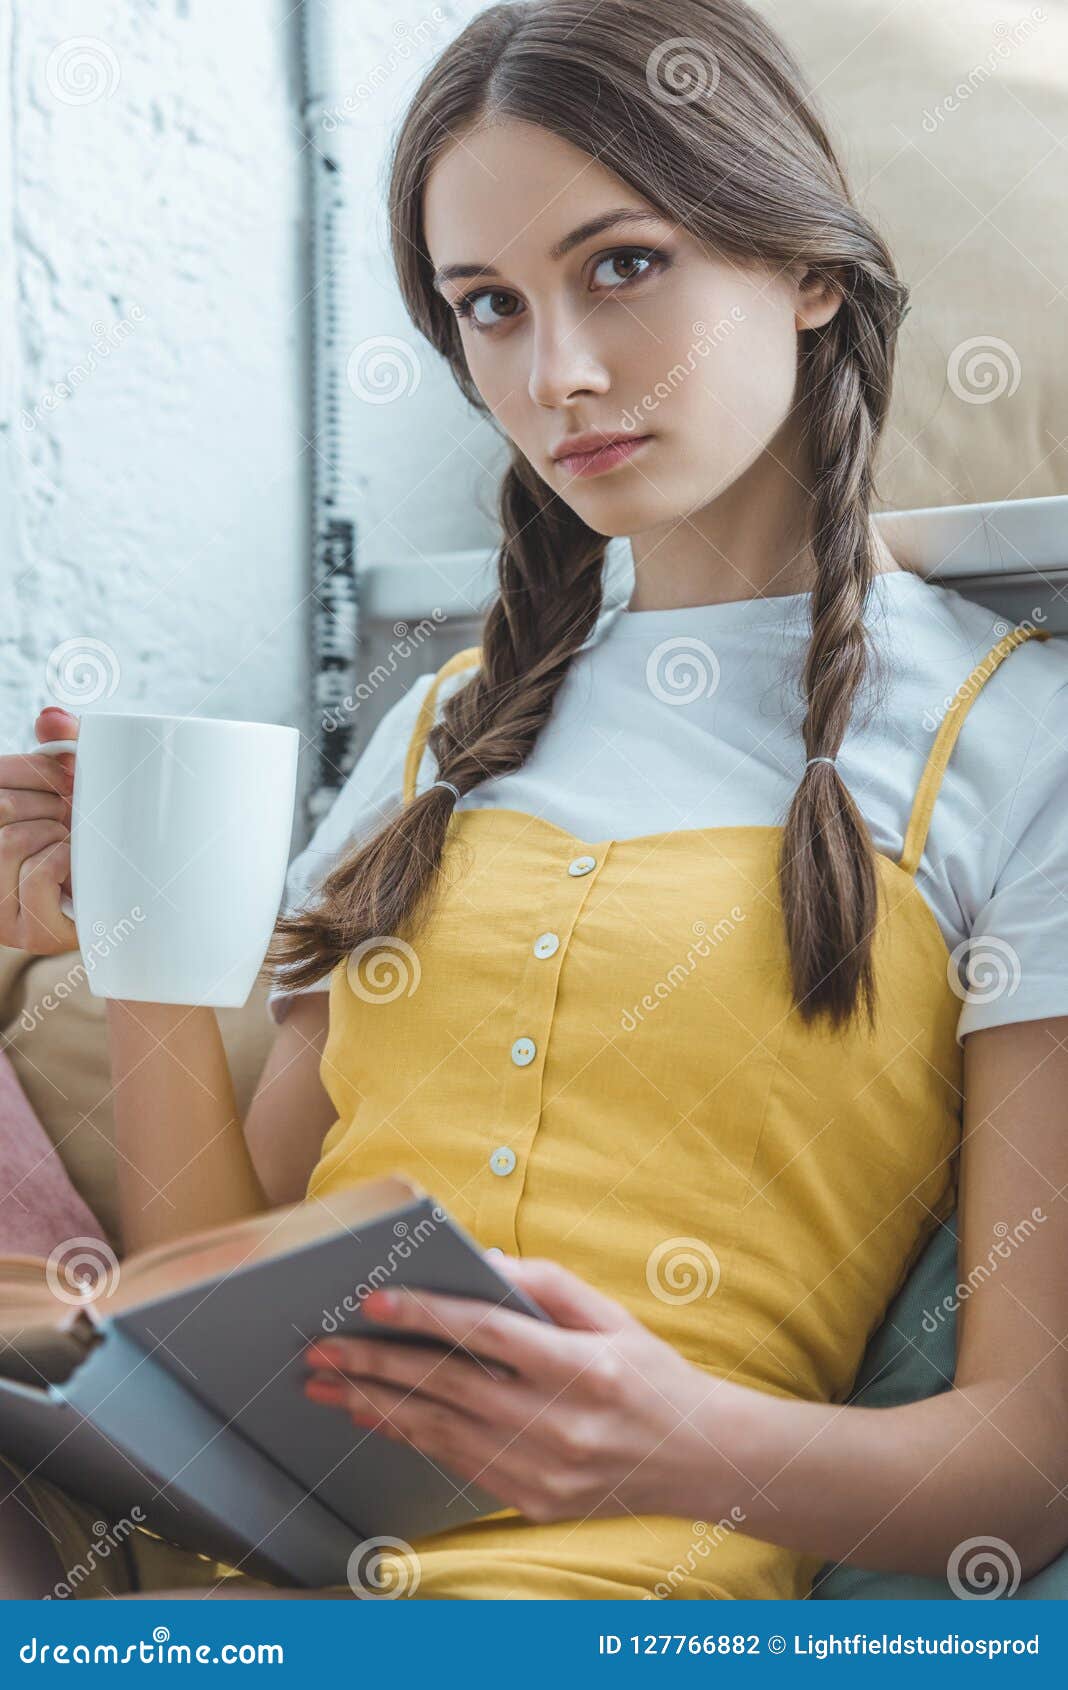 https://thumbs.dreamstime.com/z/beautiful-teen-girl-cup-coffee-beautiful-teen-girl-cup-coffee-book-127766882.jpg